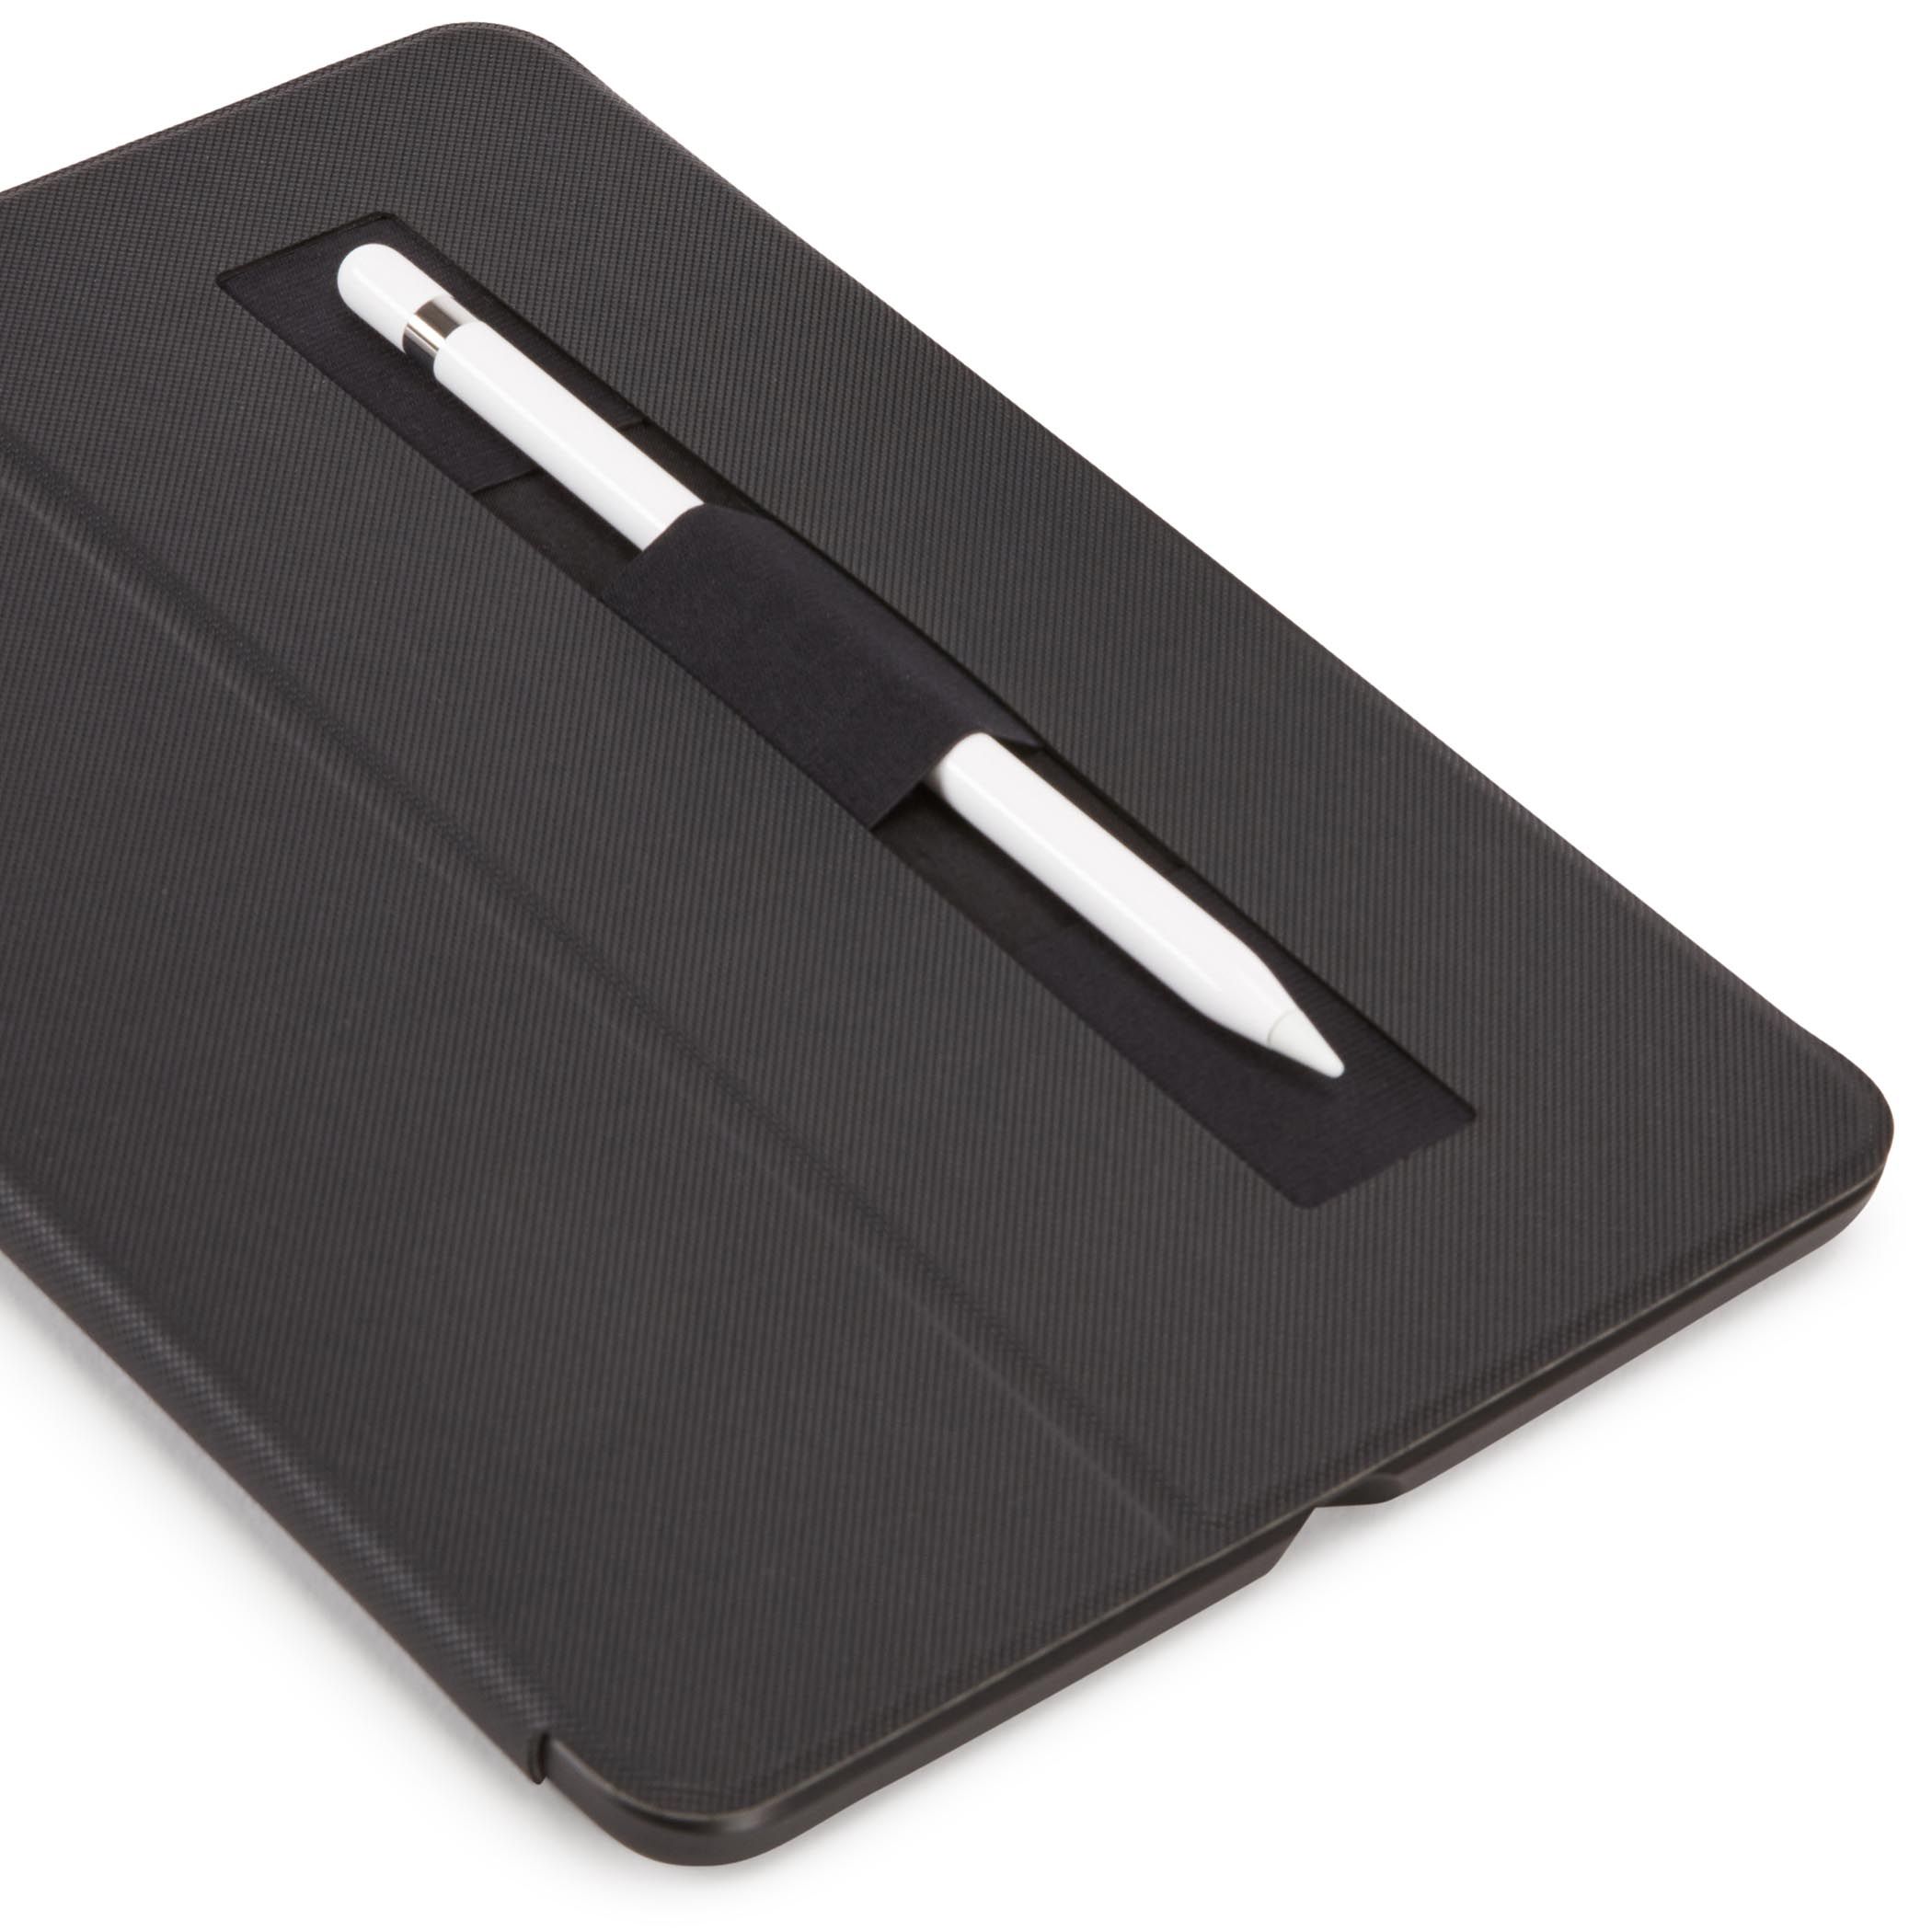 Case Logic SnapView 10.2" iPad® case